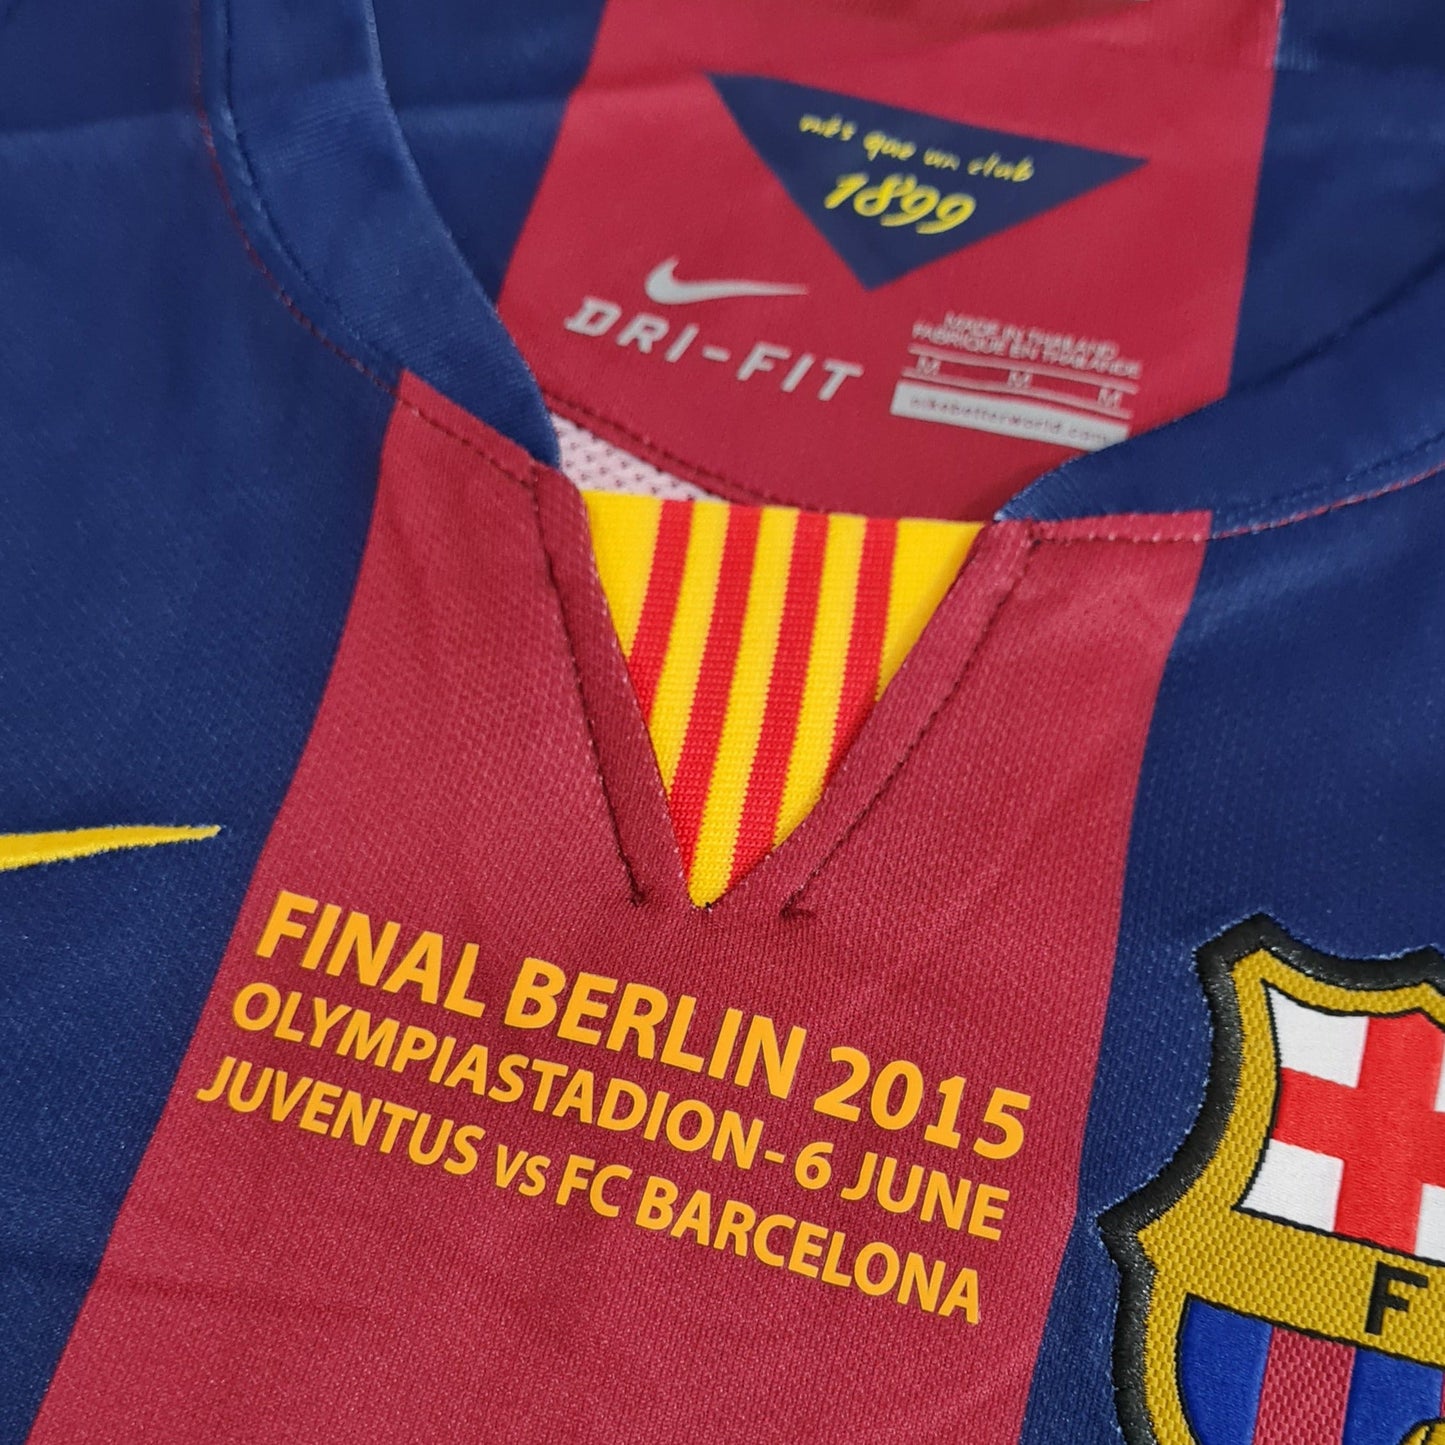 Barcelona Titular 2014/15 Matchday: Final de Champions - Thunder Internacional